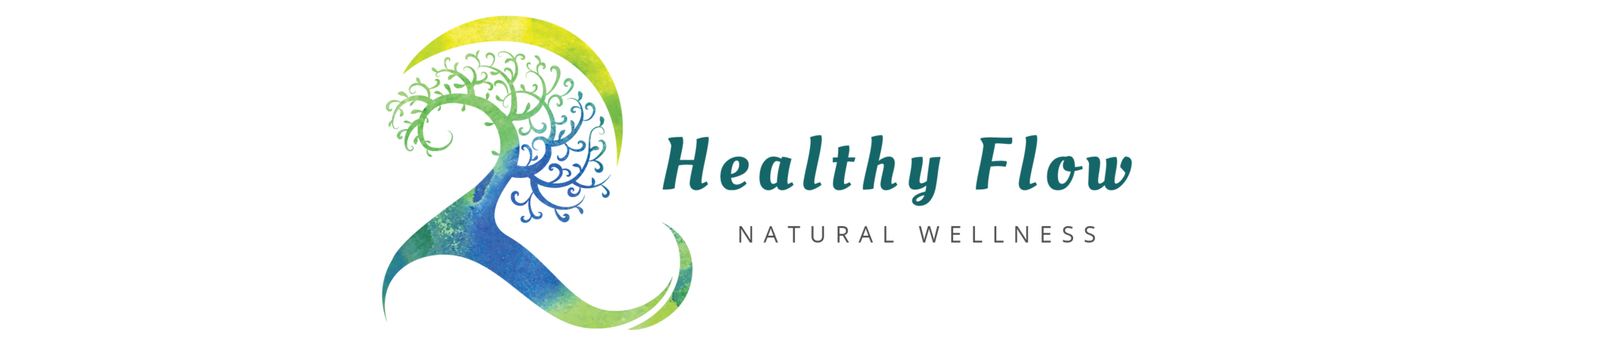 Healthy Flow Natural Wellness